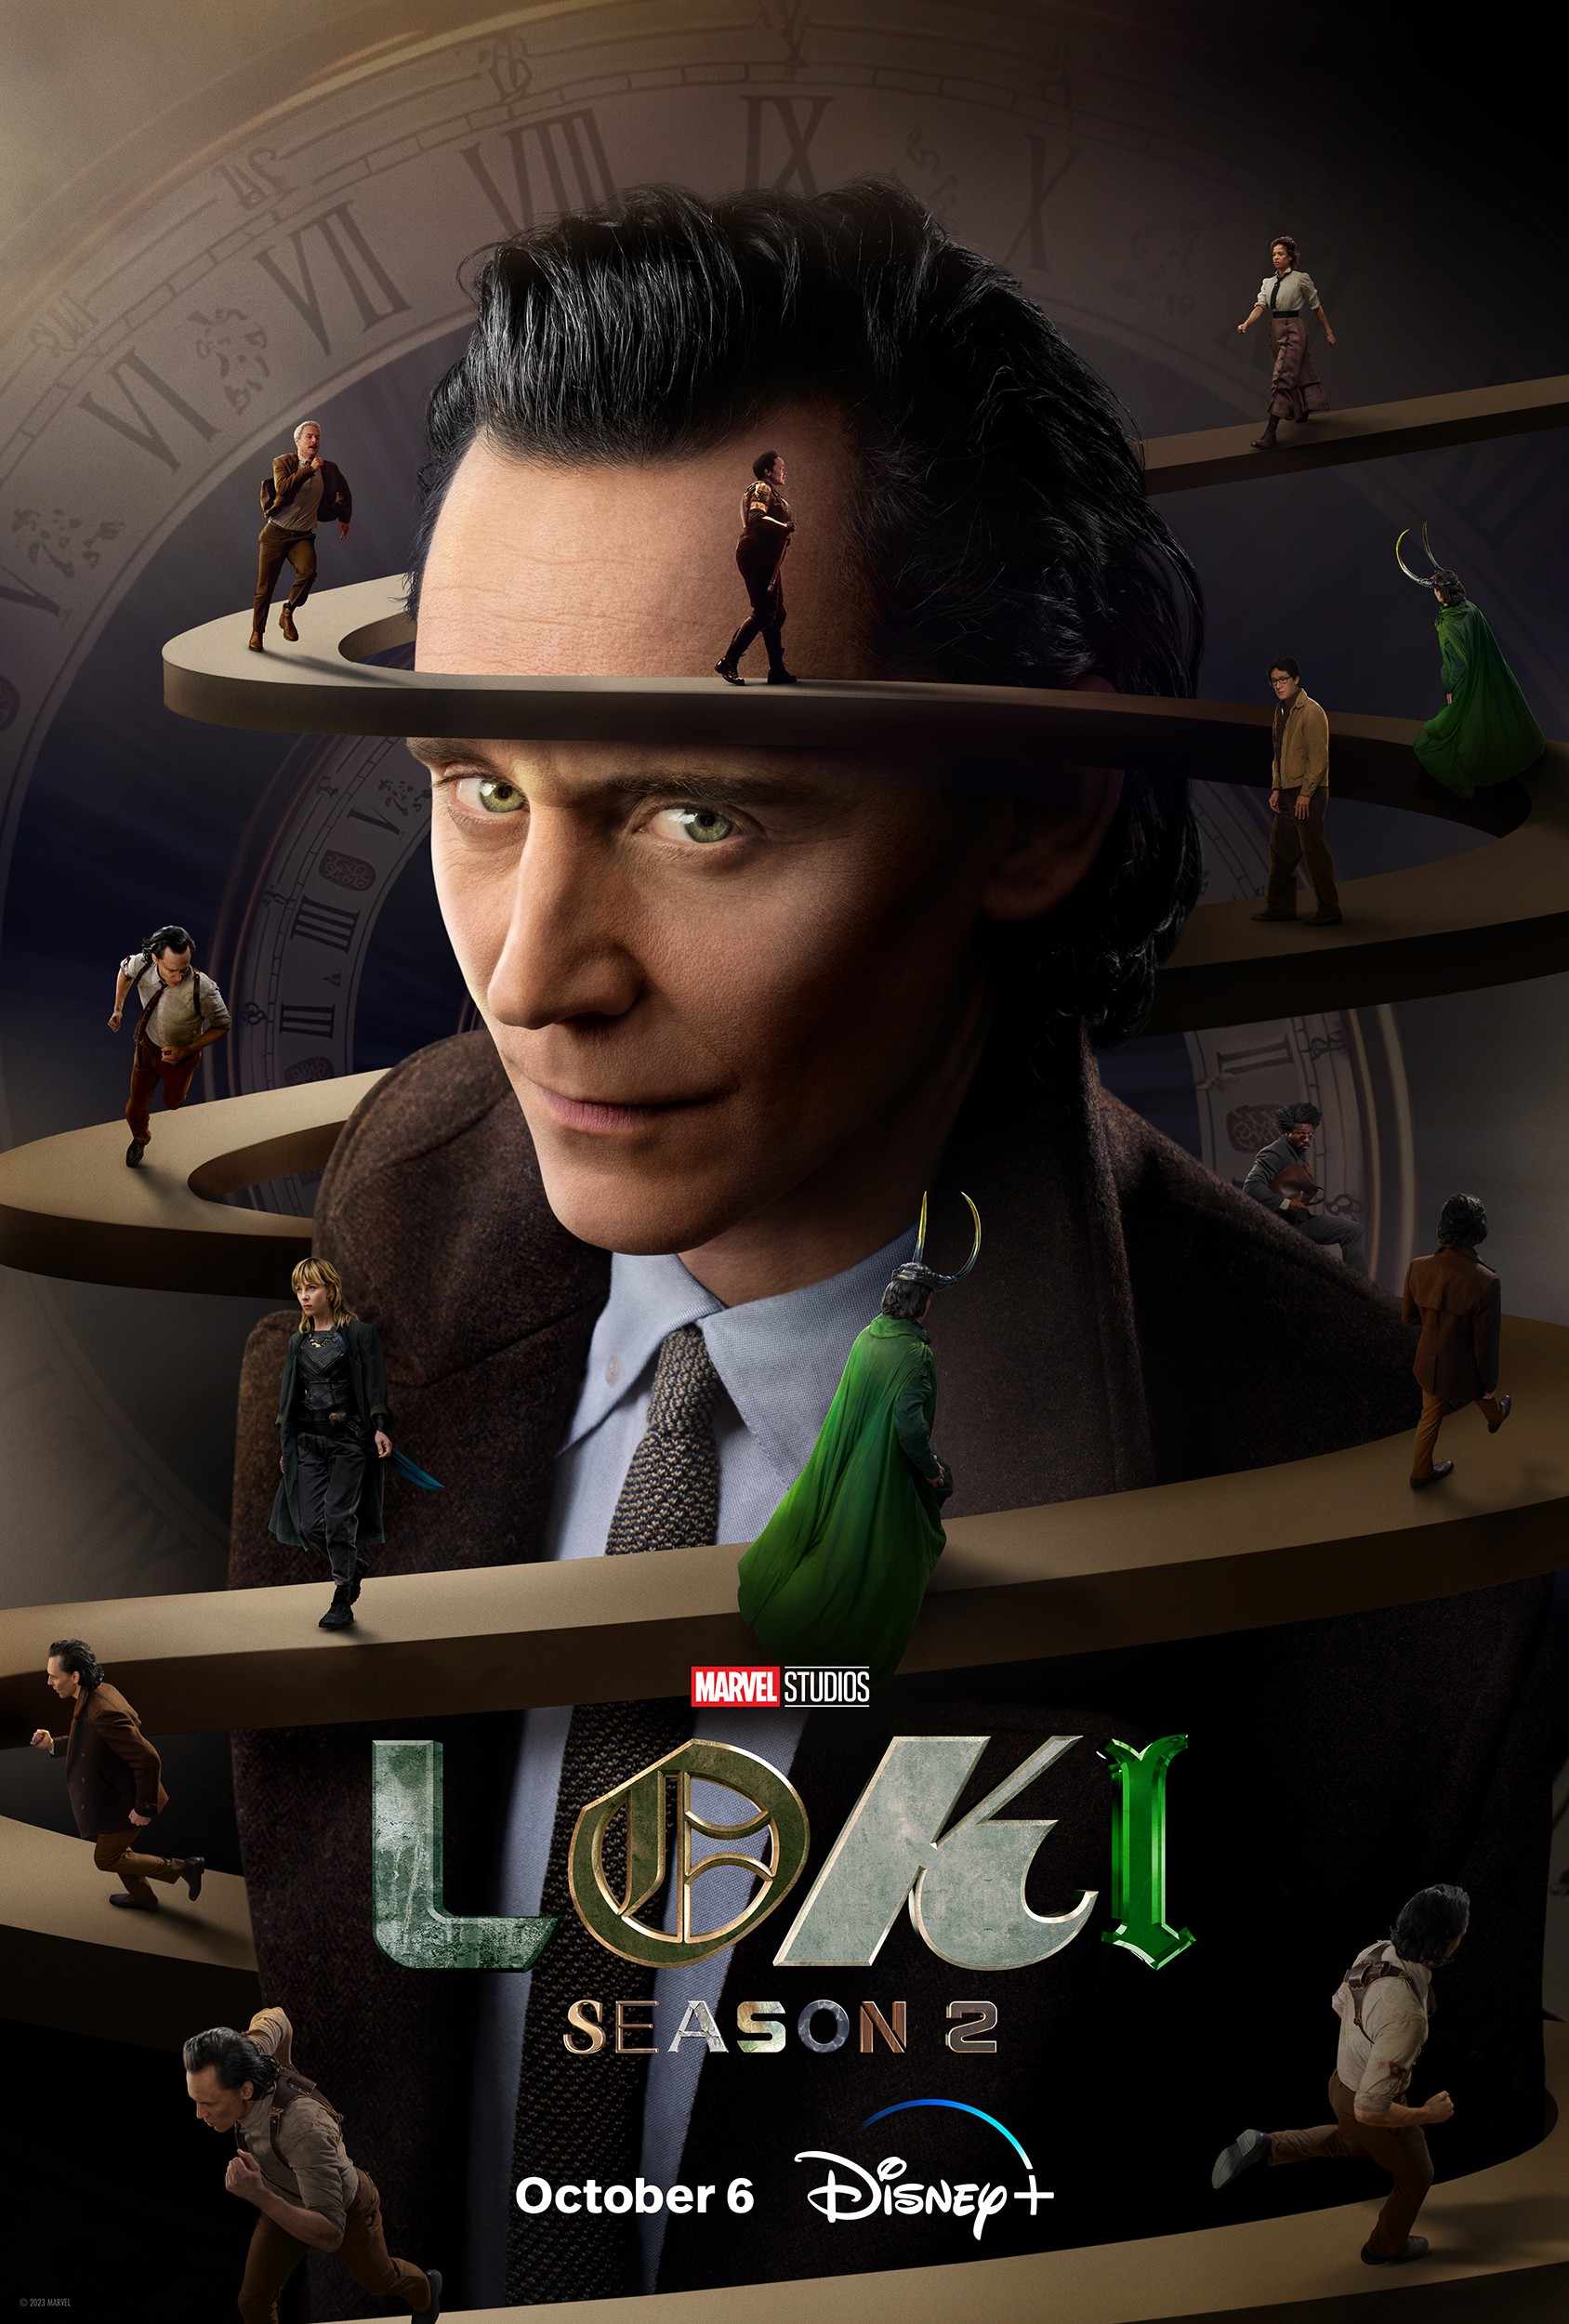 Loki' season 2 episode 6 review: Finding a glorious purpose